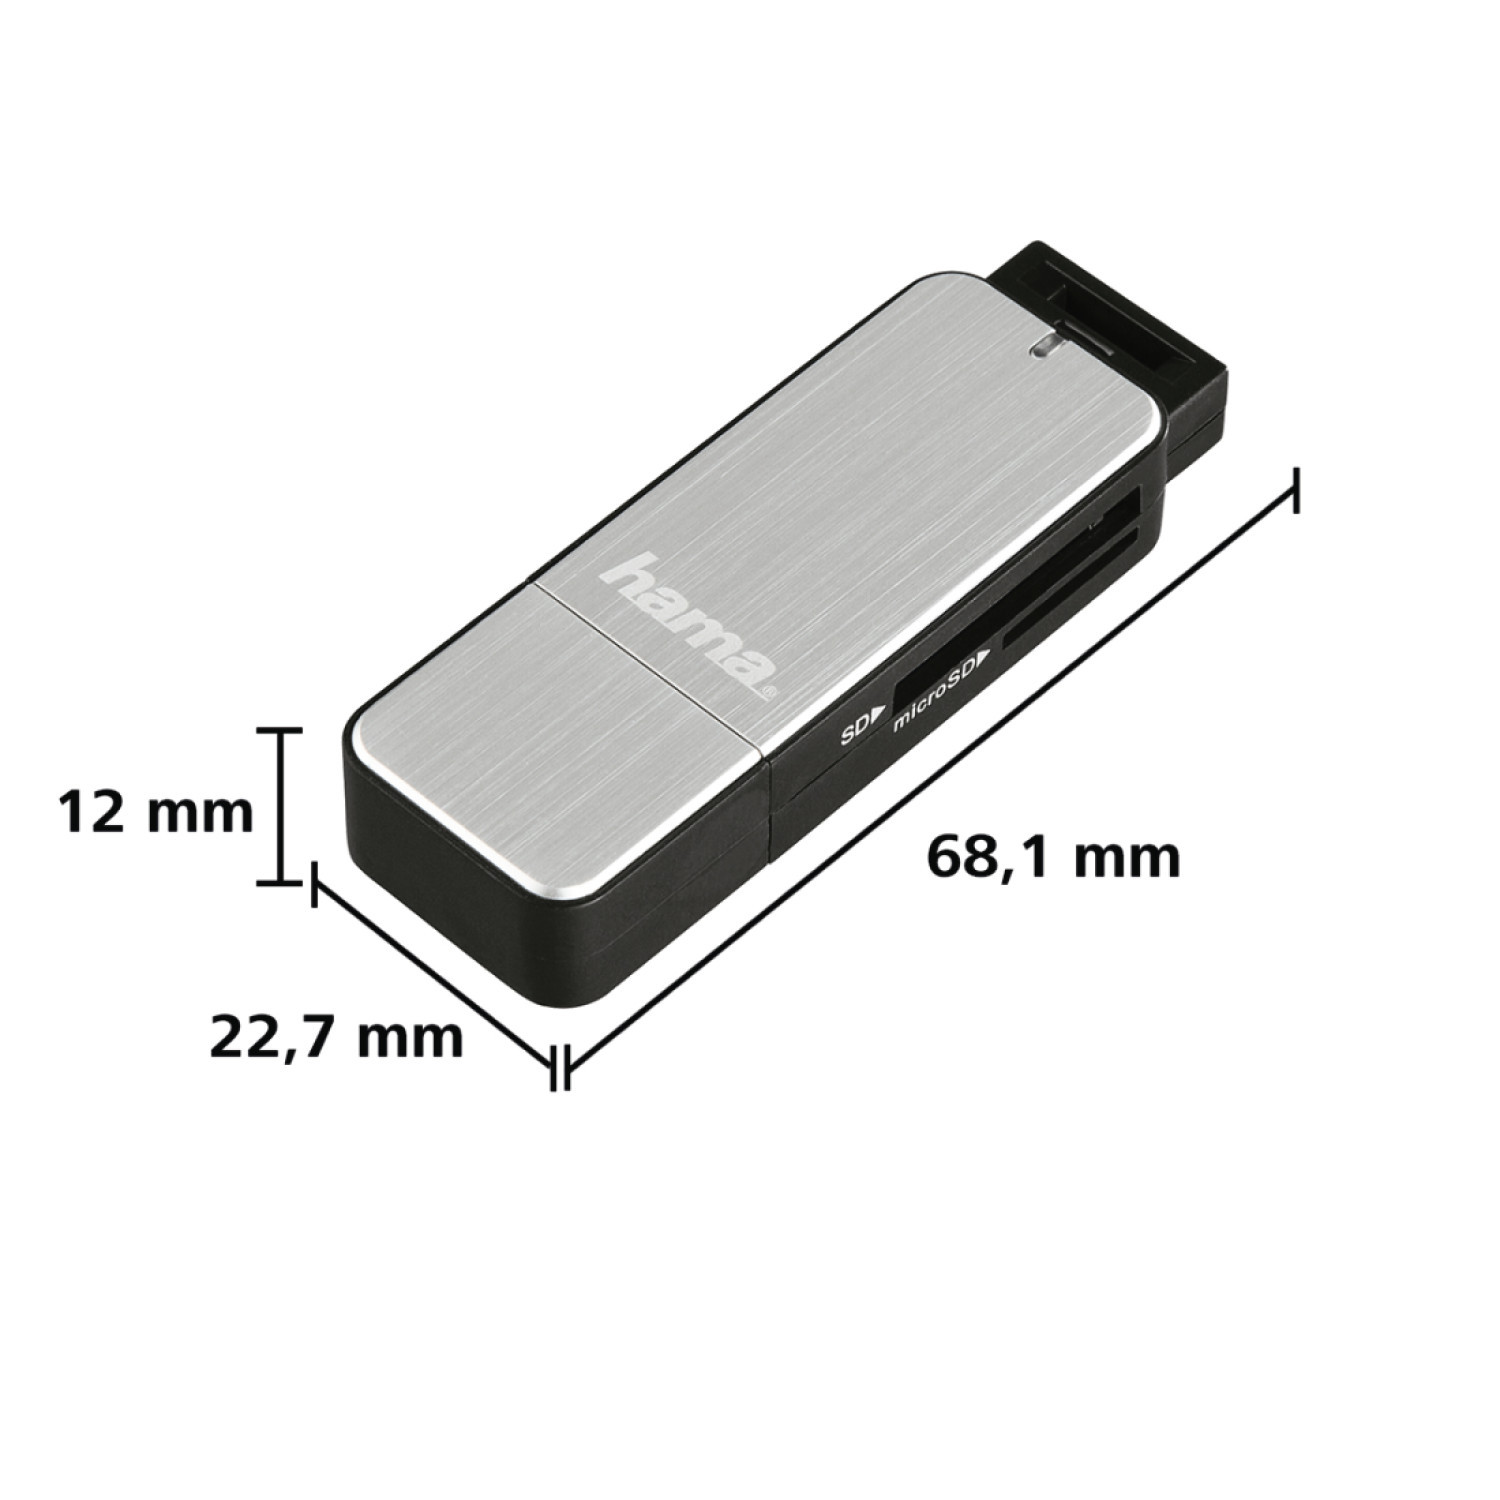 Четец за карти HAMA 123900, USB 3.0, SD/microSD, сребрист